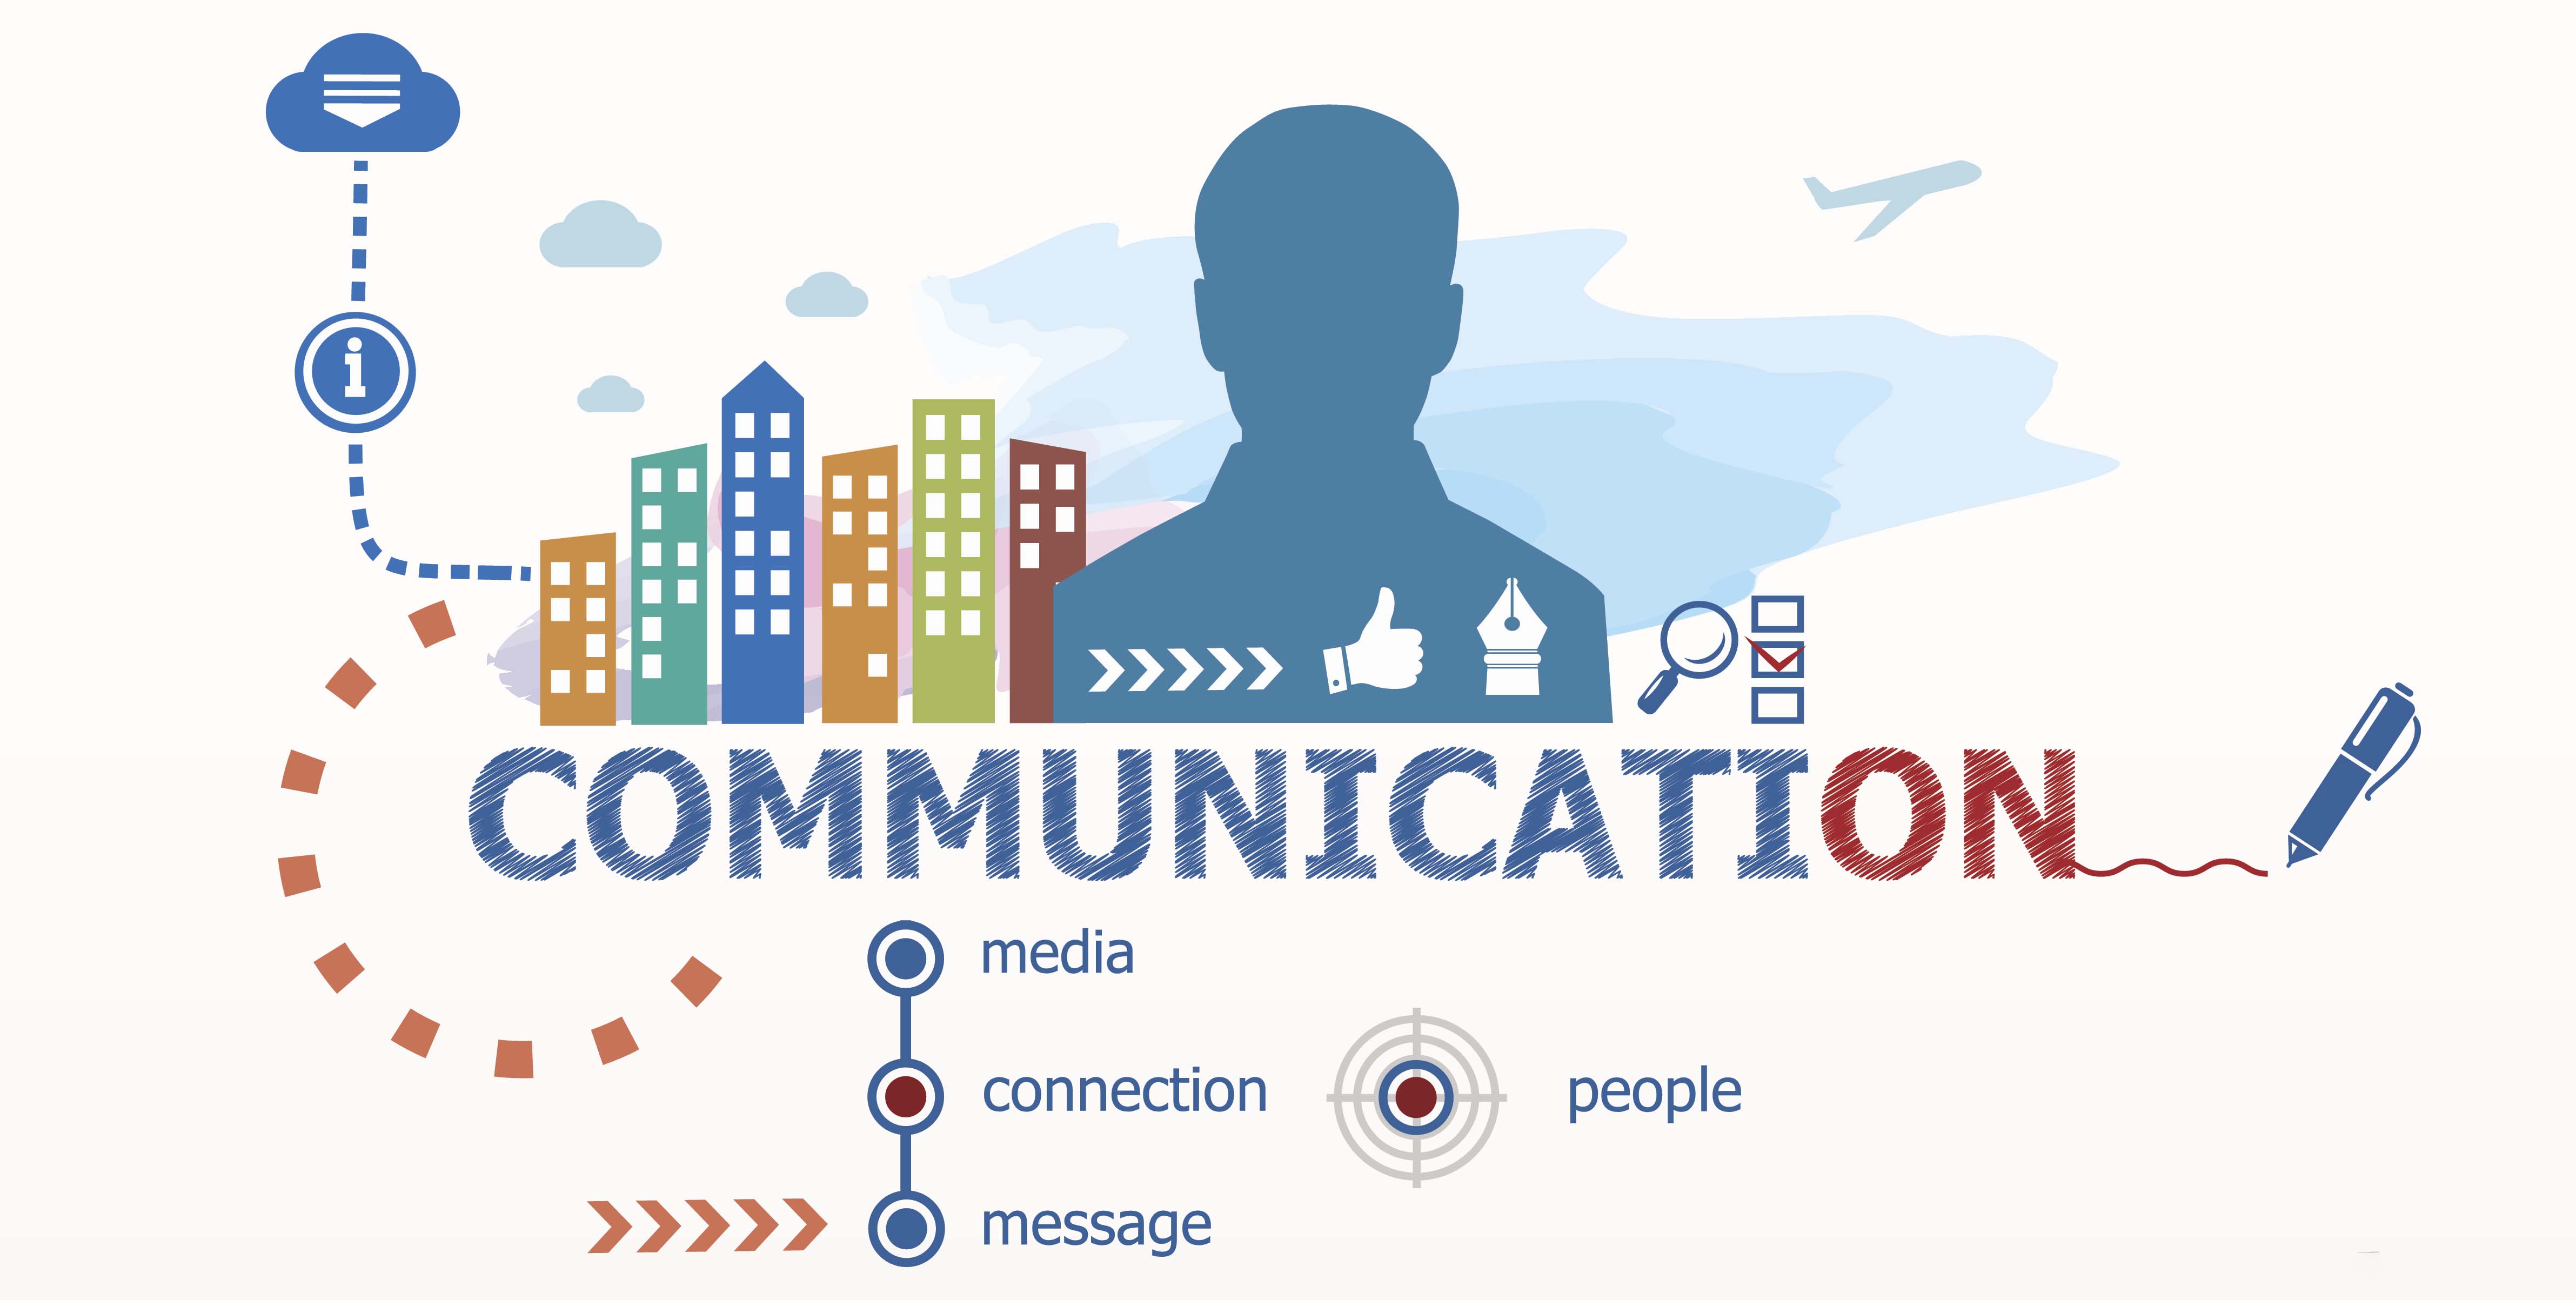 Communication_Change_Management_blog_image.jpg